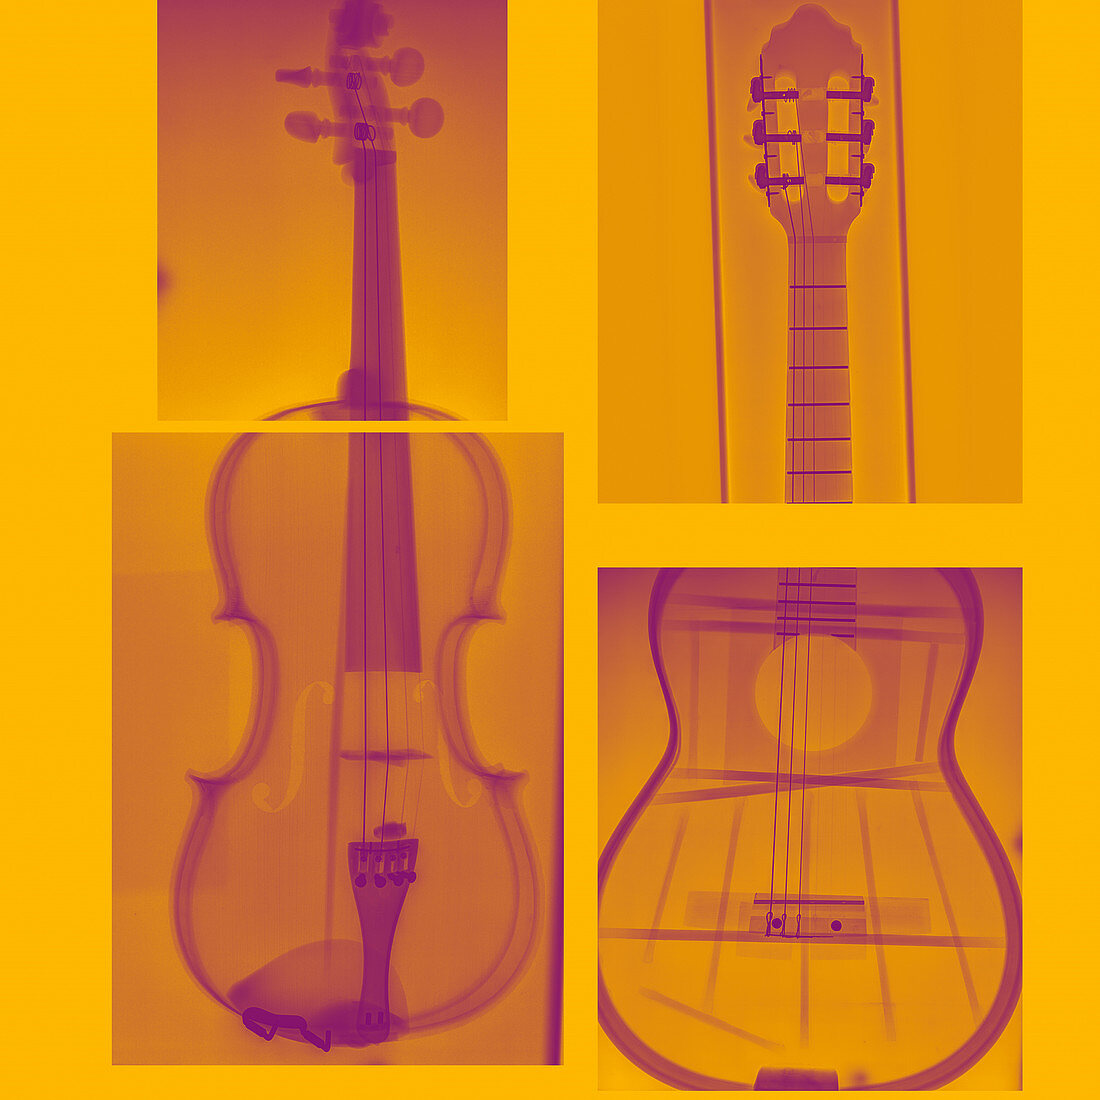 Violin and guitar, X-ray